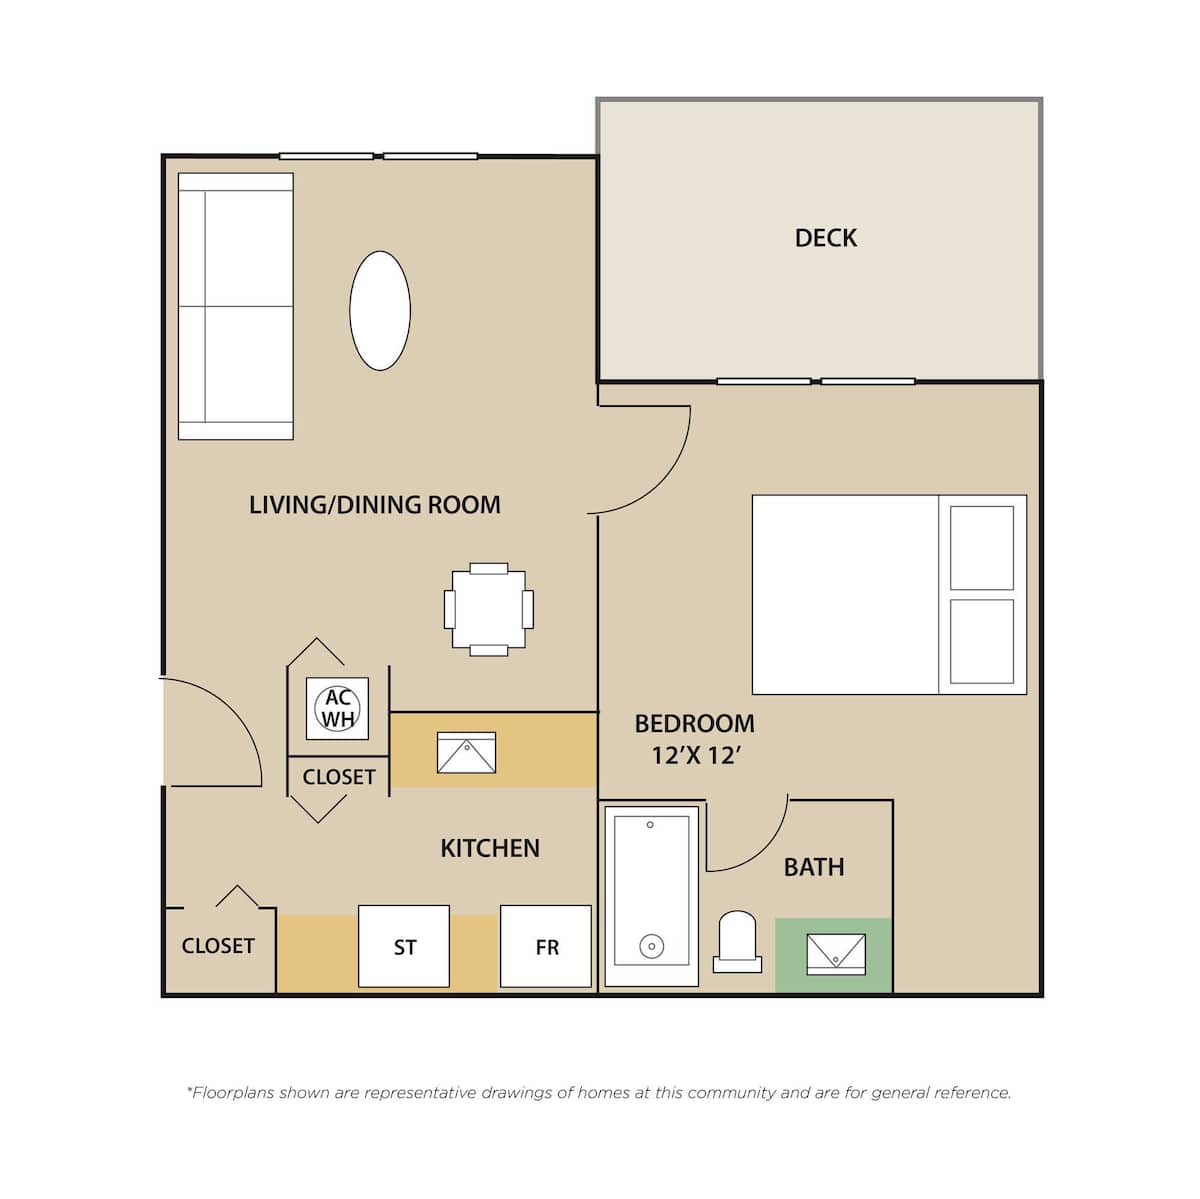 Floorplan diagram for Fairfield, showing 1 bedroom